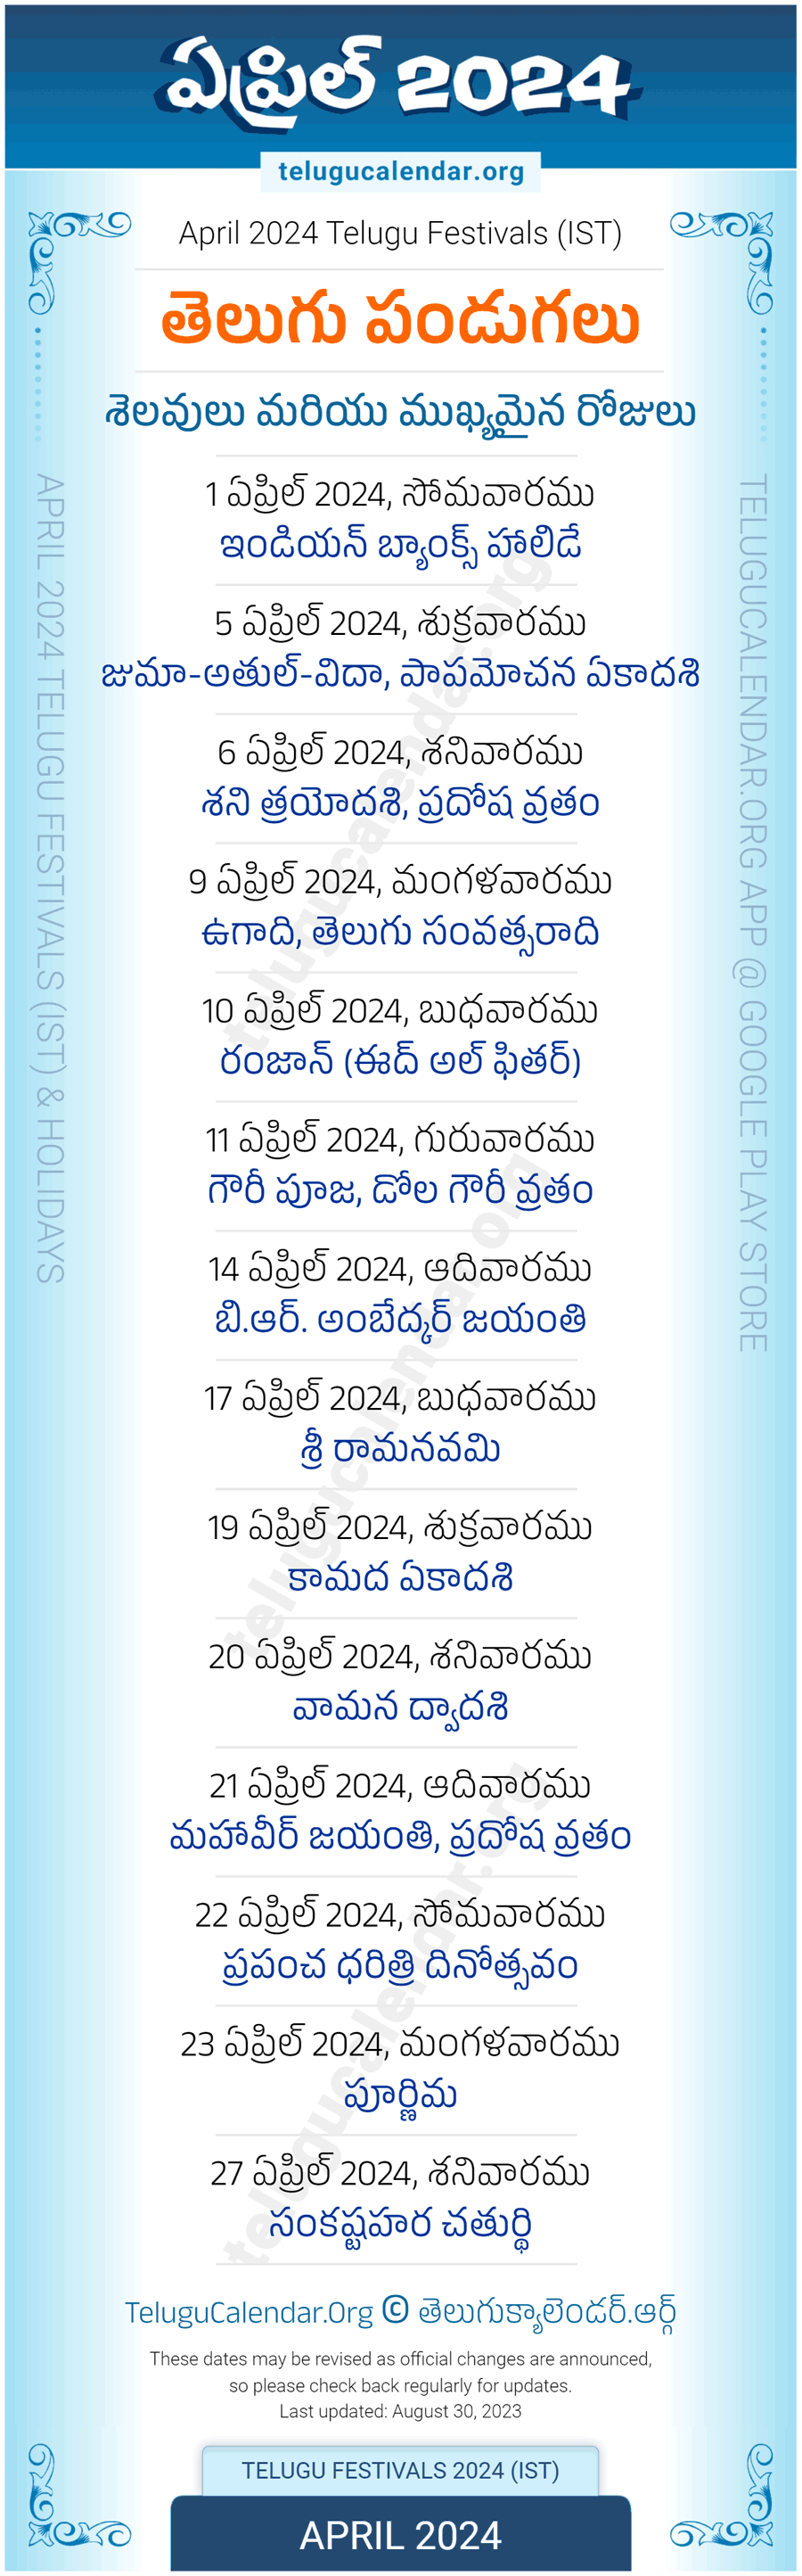 Telugu Festivals 2024 April Pdf Download for April 2024 Telugu Calendar